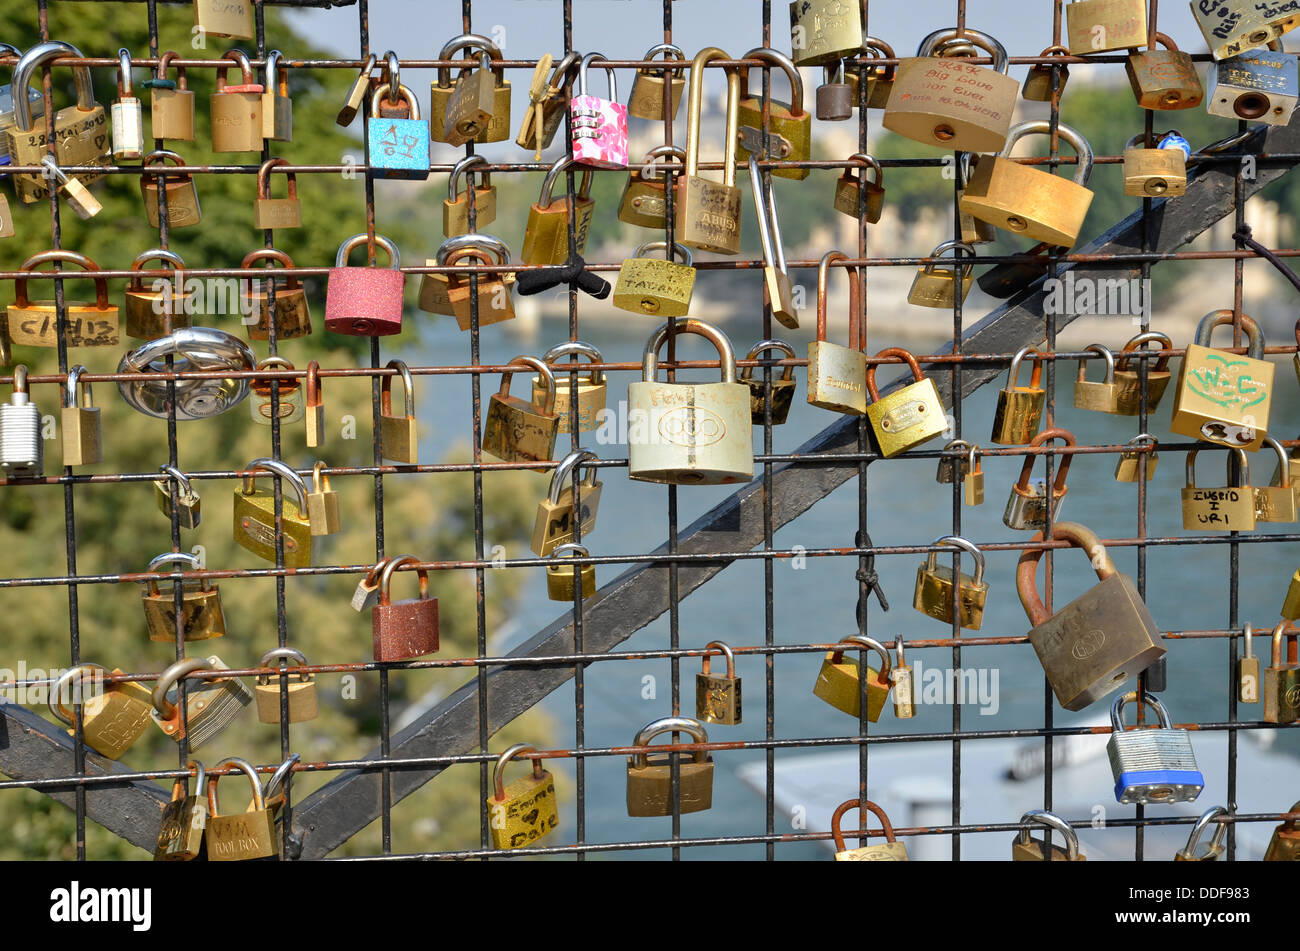 Love Locks on the Pont Neuf bridge in Paris Stock Photo - Alamy